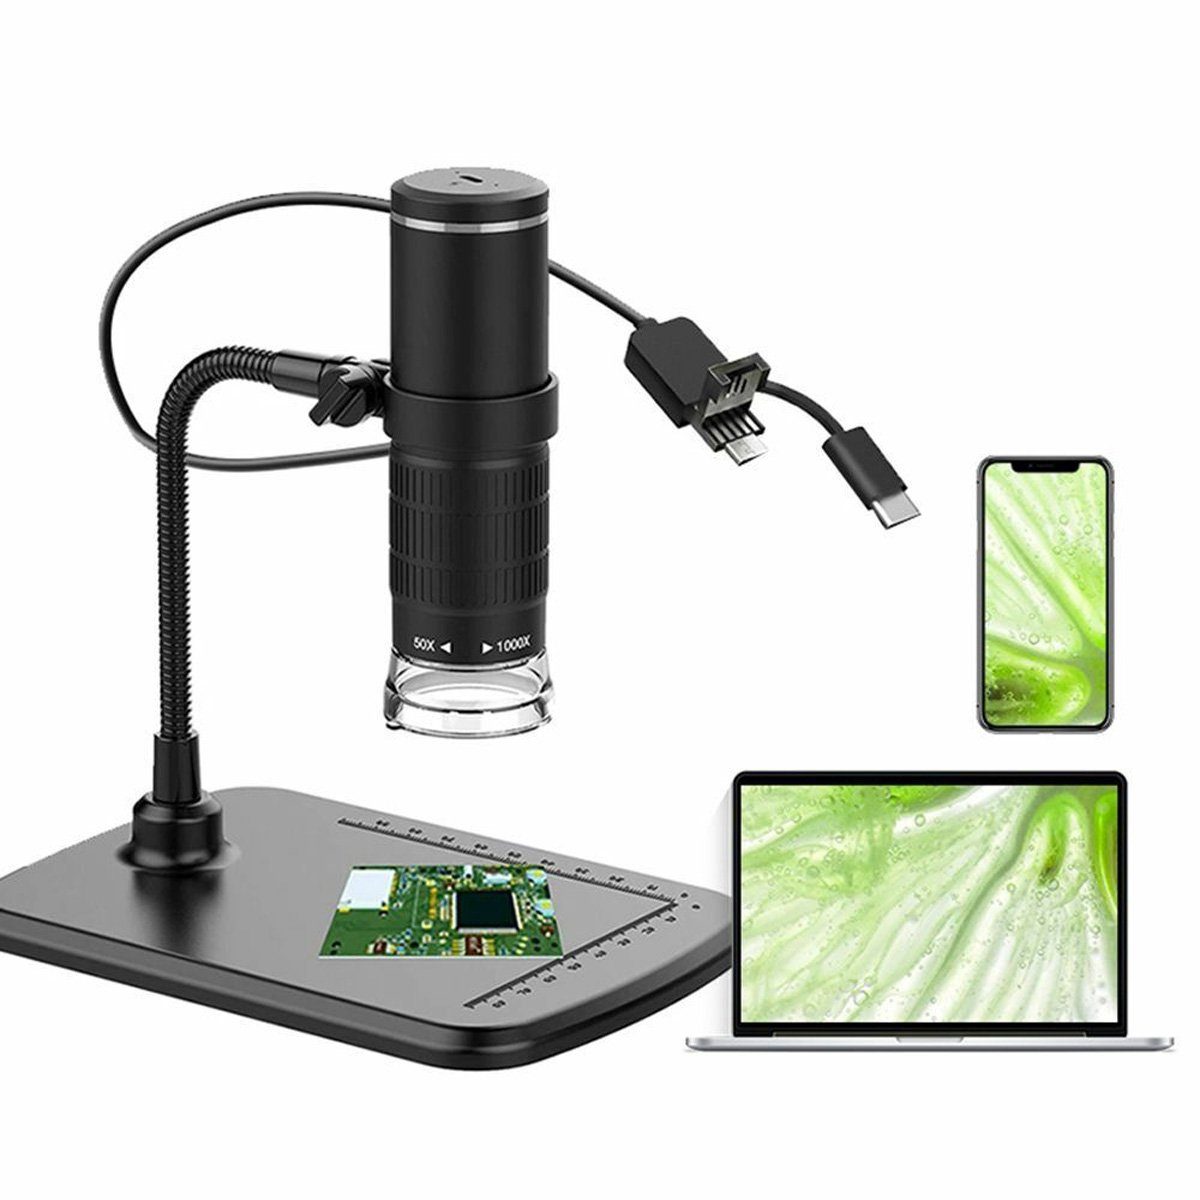 yozhiqu Digitales Mikroskopvergrößerer, drahtlos mit WiFi, 50x-1000x USB-Mikroskop (flexibler Ständer - digitales Mikroskop für vielseitige Anwendungen)